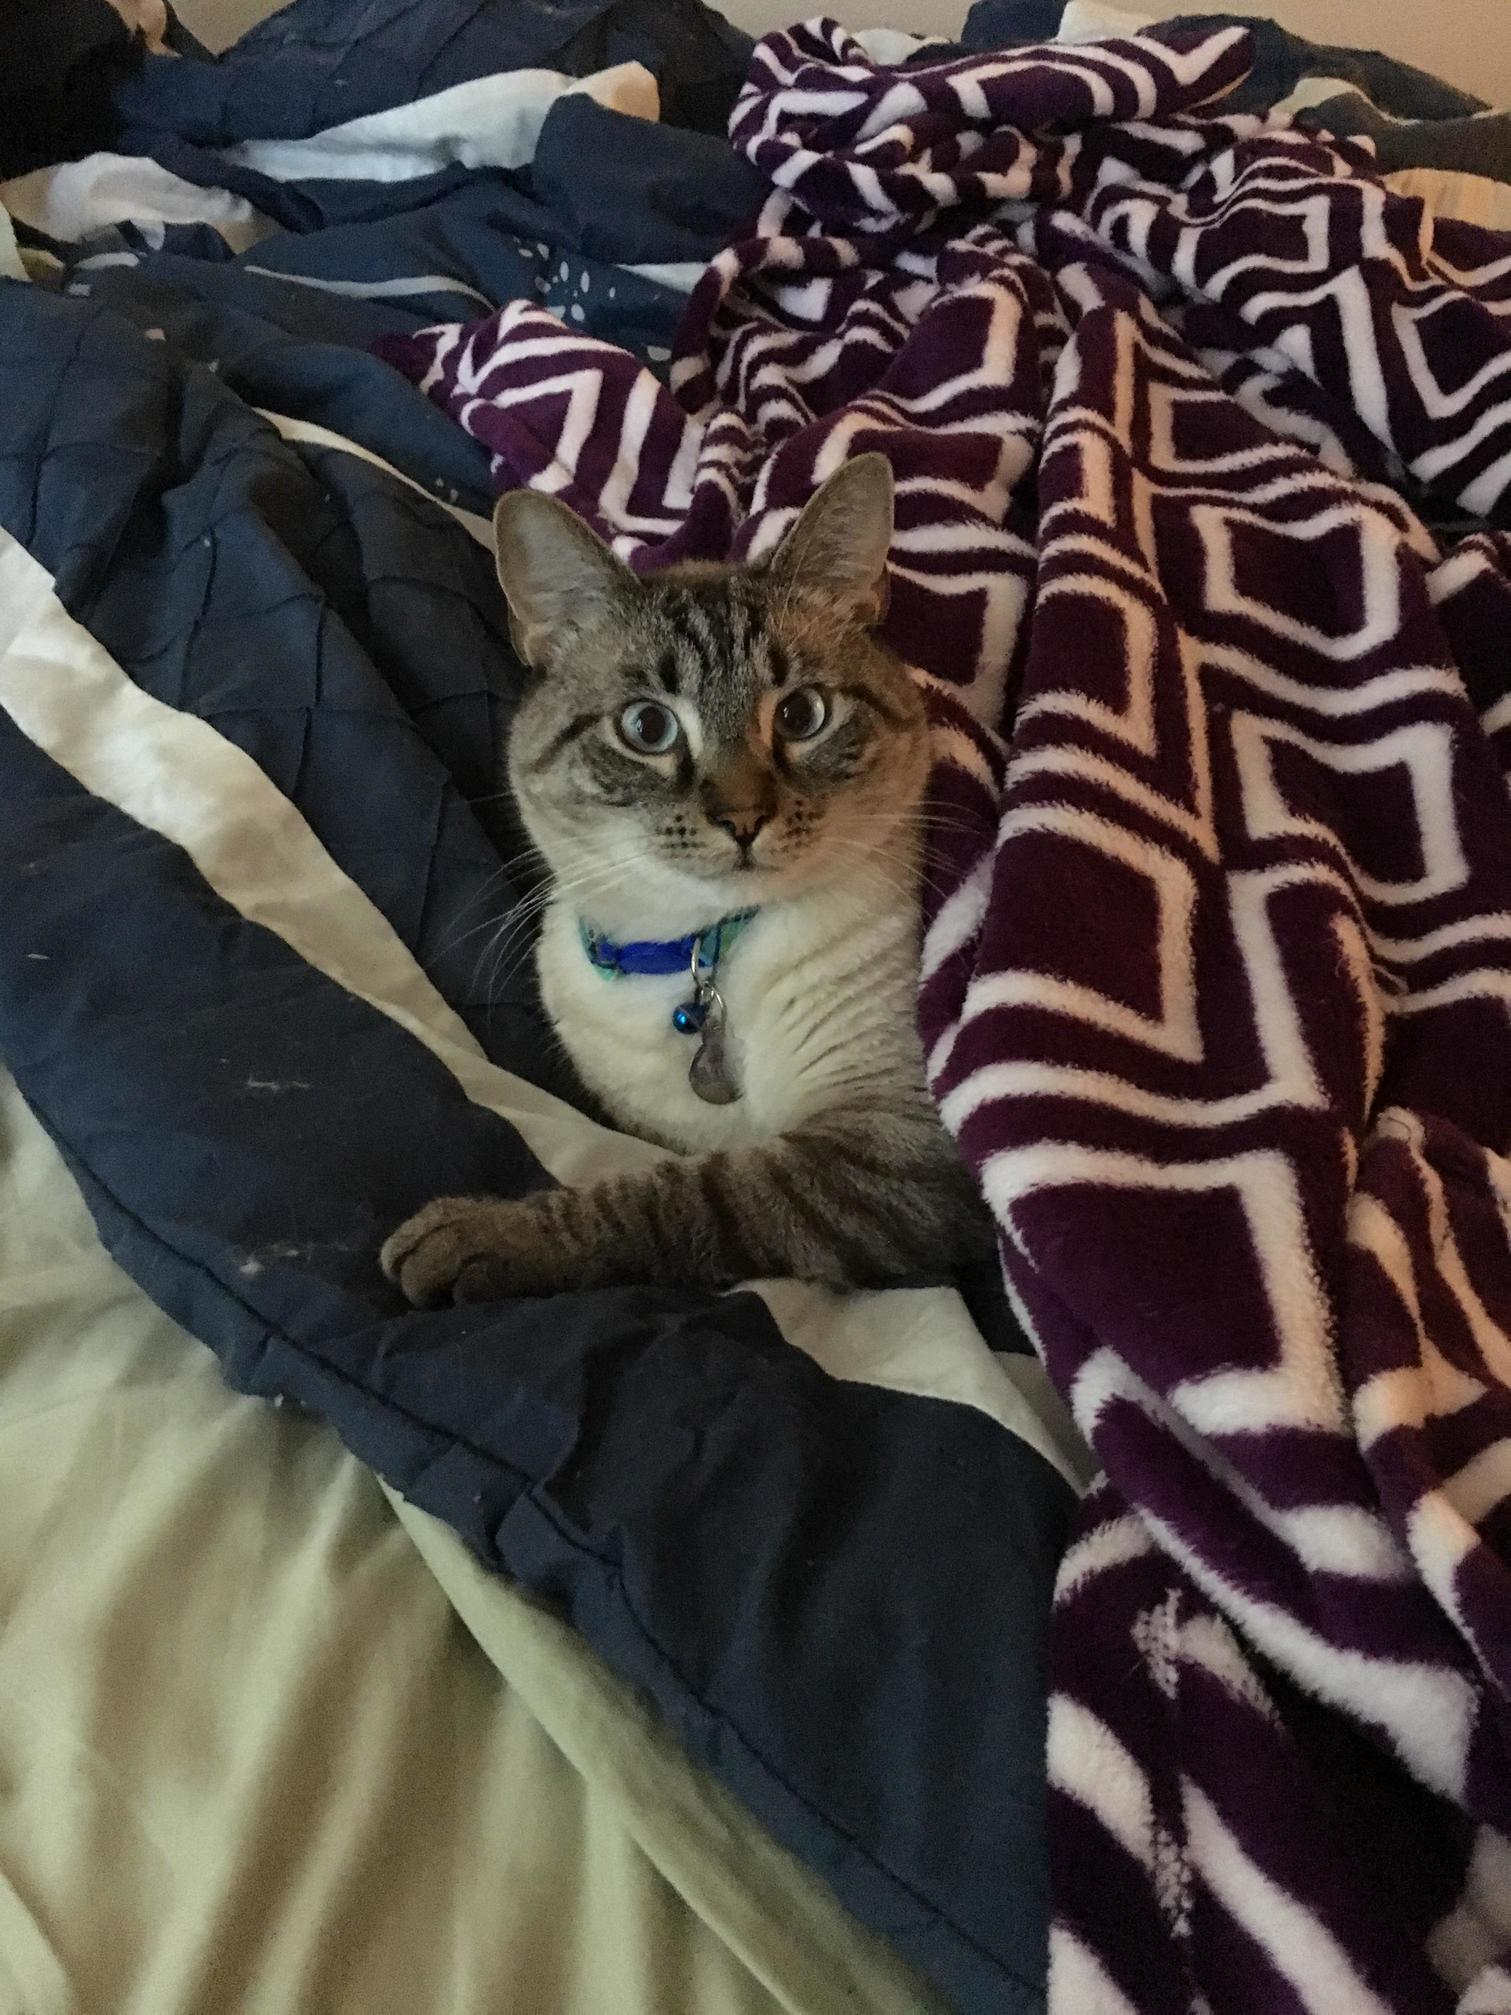 Kitty loves the purple fuzzy blanket